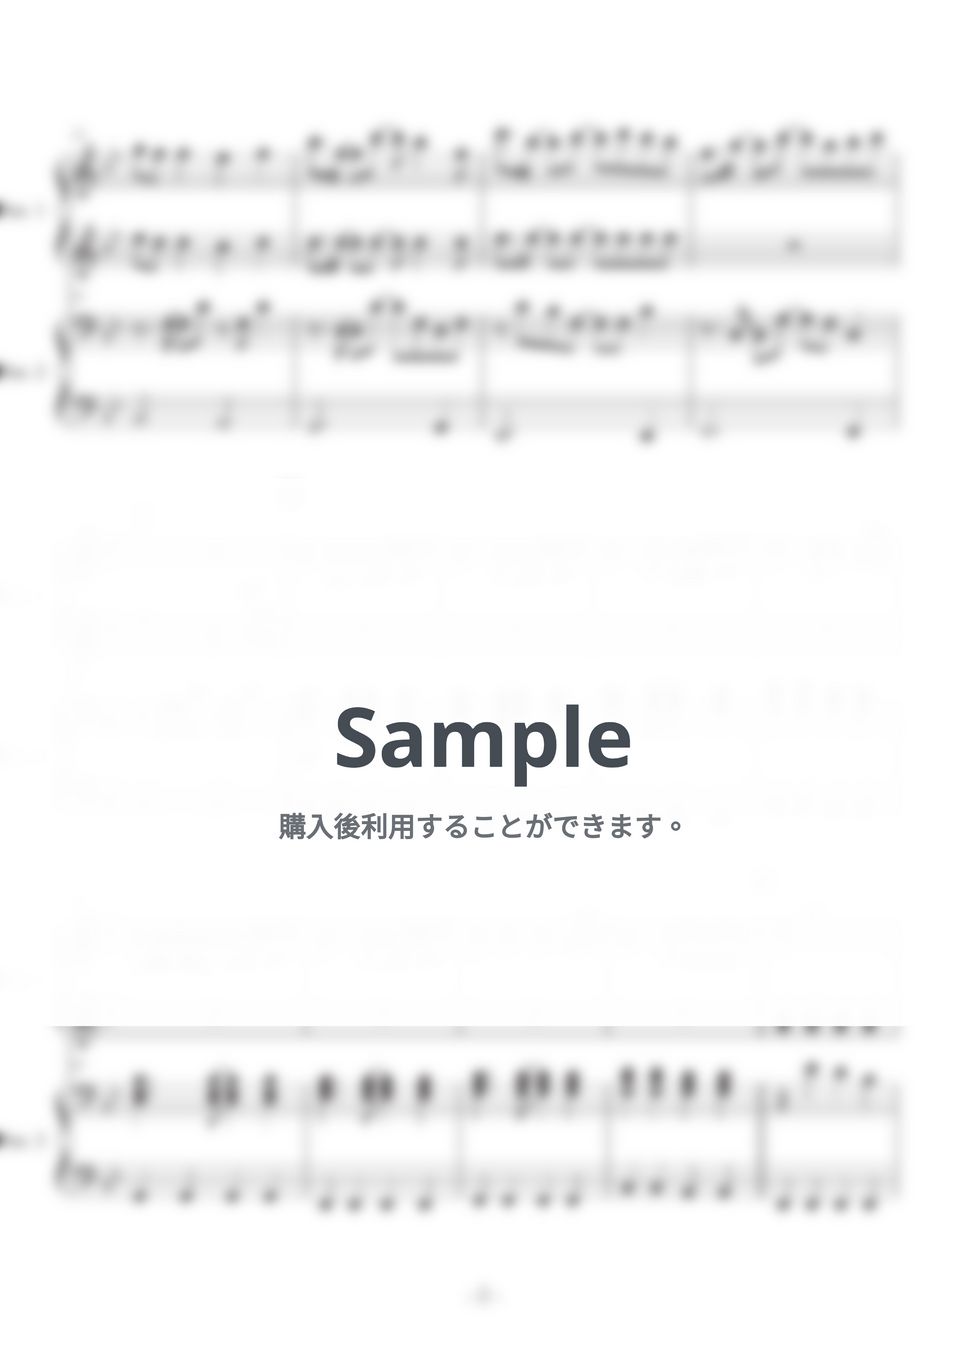 Snow Man - タペストリー (ピアノ連弾 / 初級 / 『わたしの幸せな結婚』主題歌) by Kanna Inoue